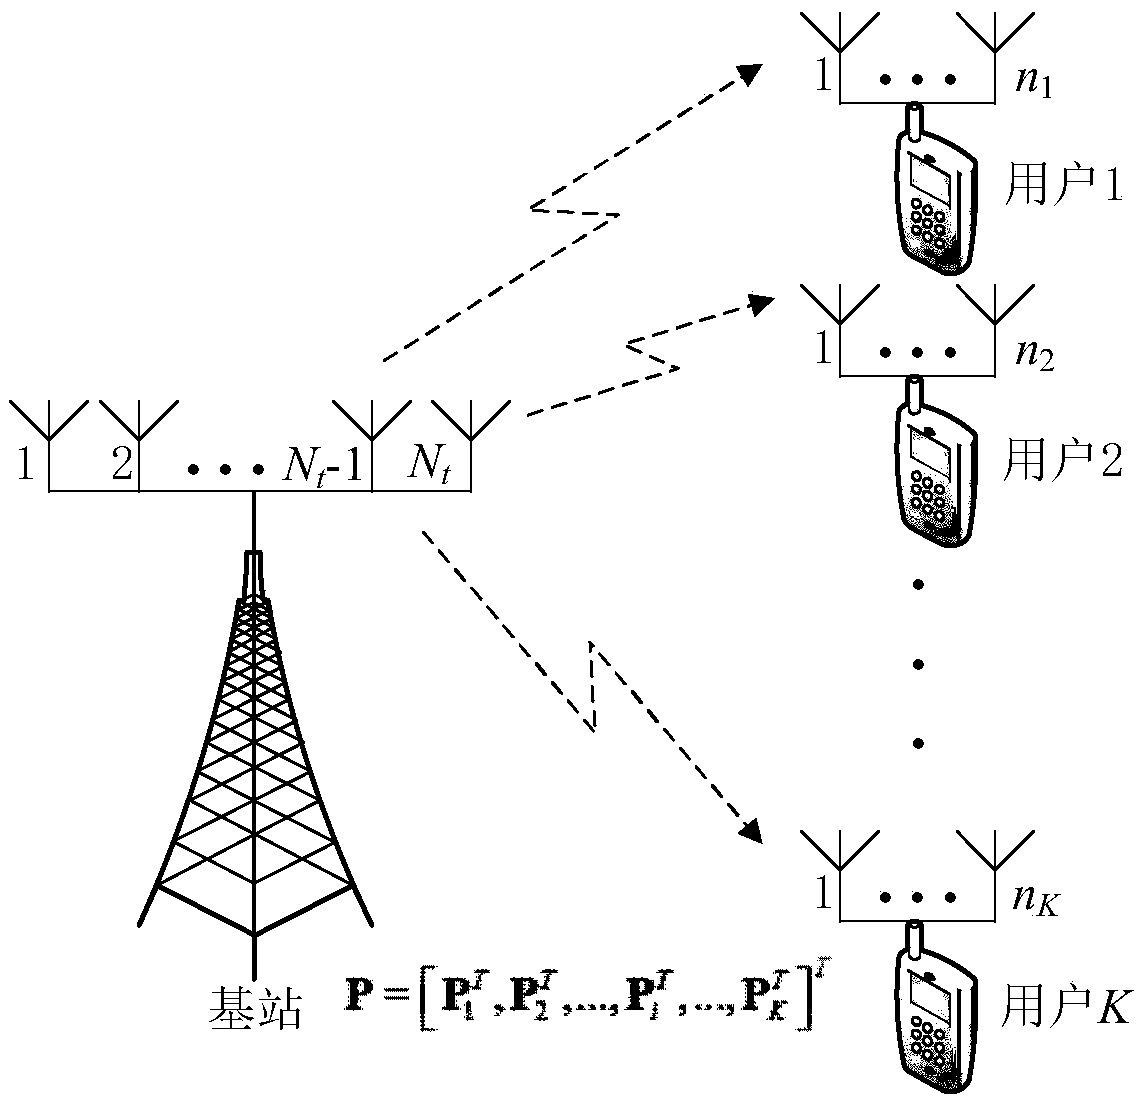 Multi-user downlink transmission method based on spatial modulation of receiving end